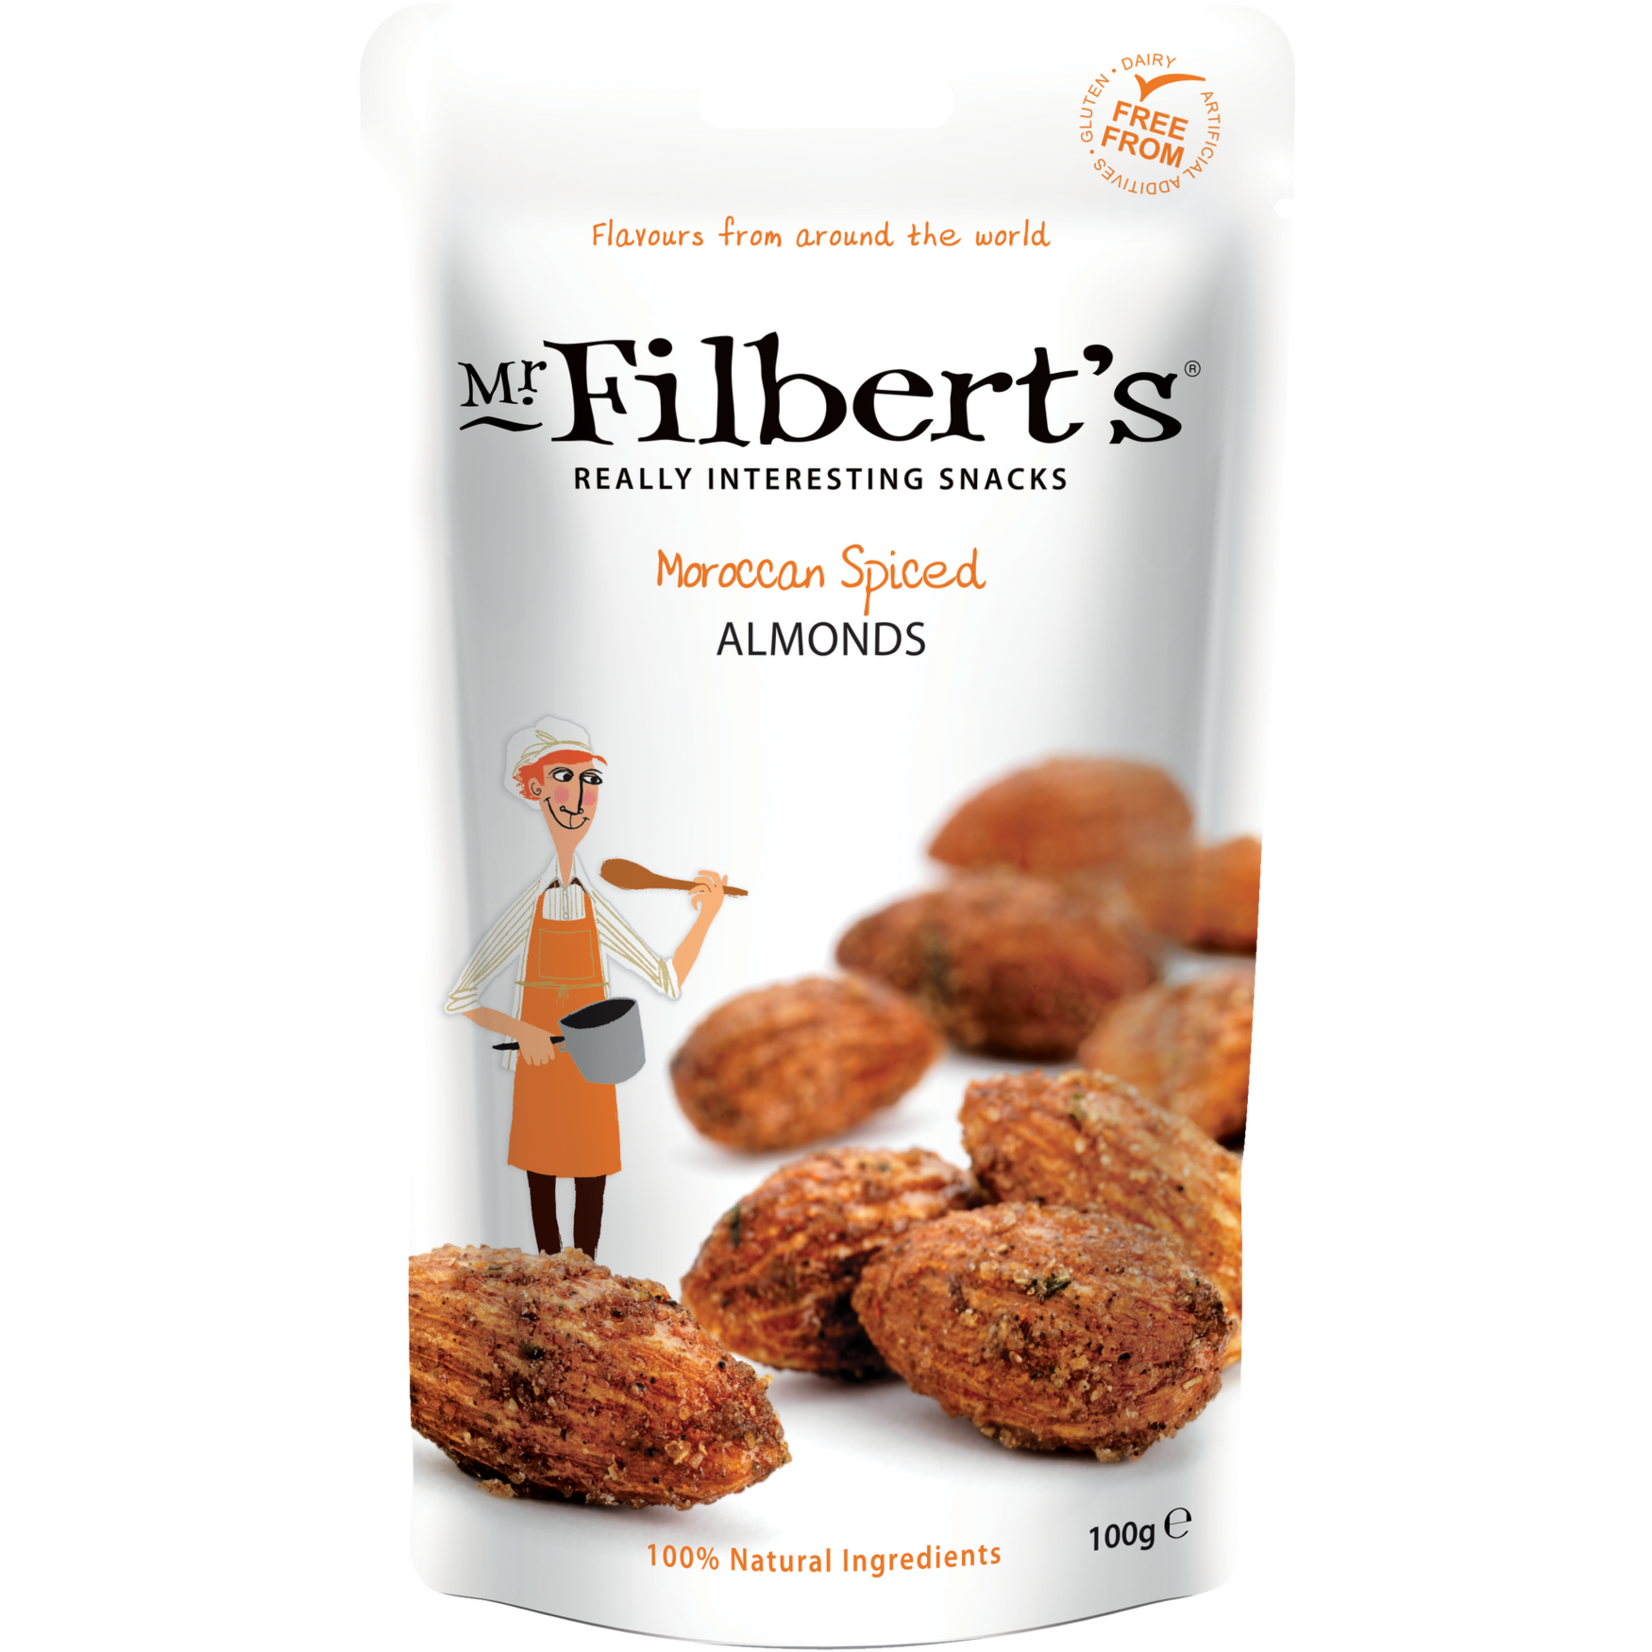 Mr. Filbert's Moroccan Spiced Almonds